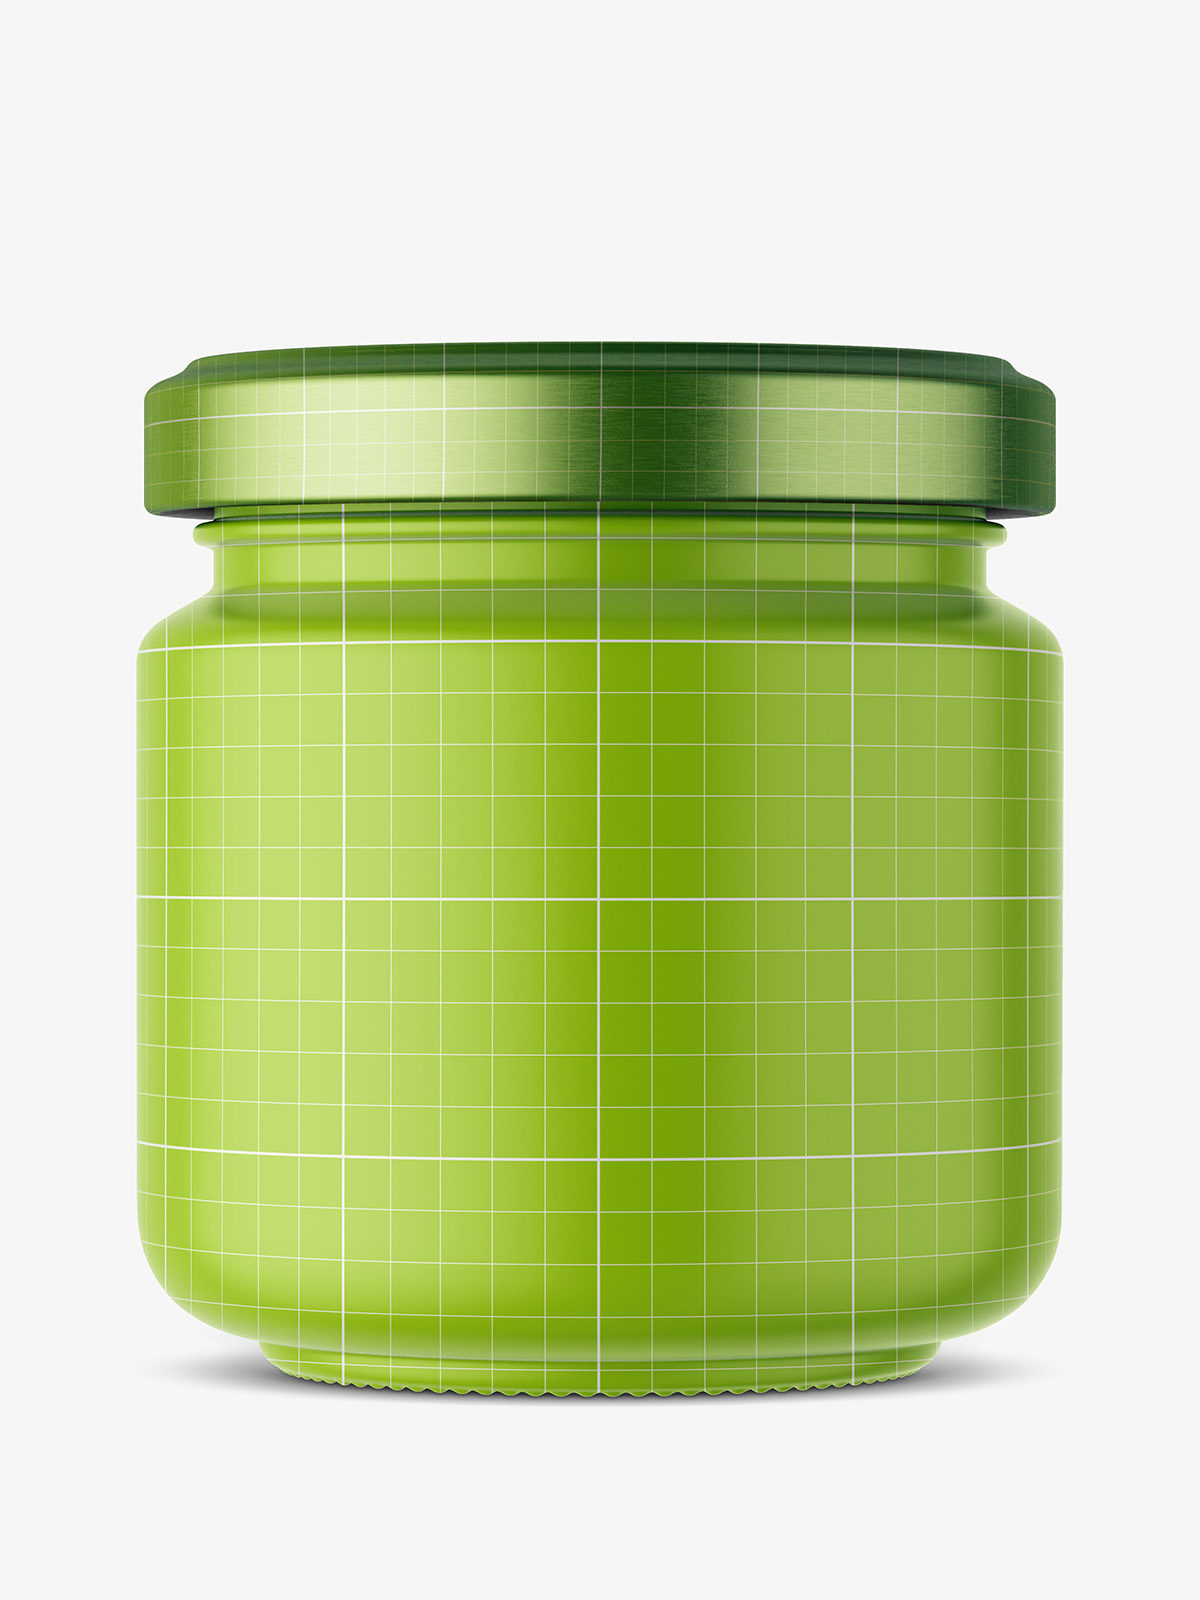 Download Tartar Sauce Jar Mockup Smarty Mockups